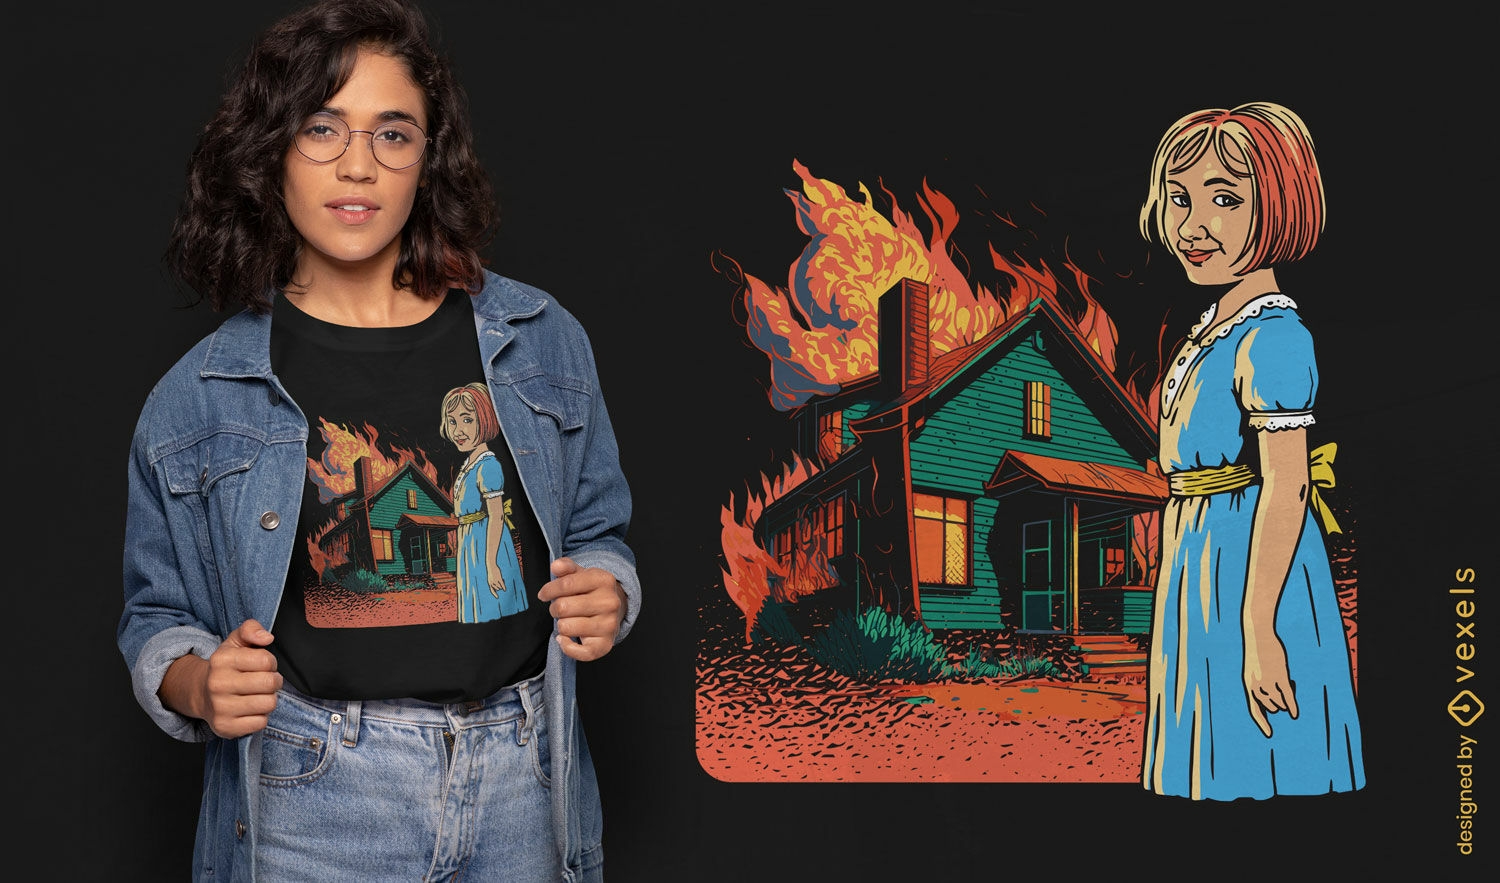 Creepy house burning down t-shirt design